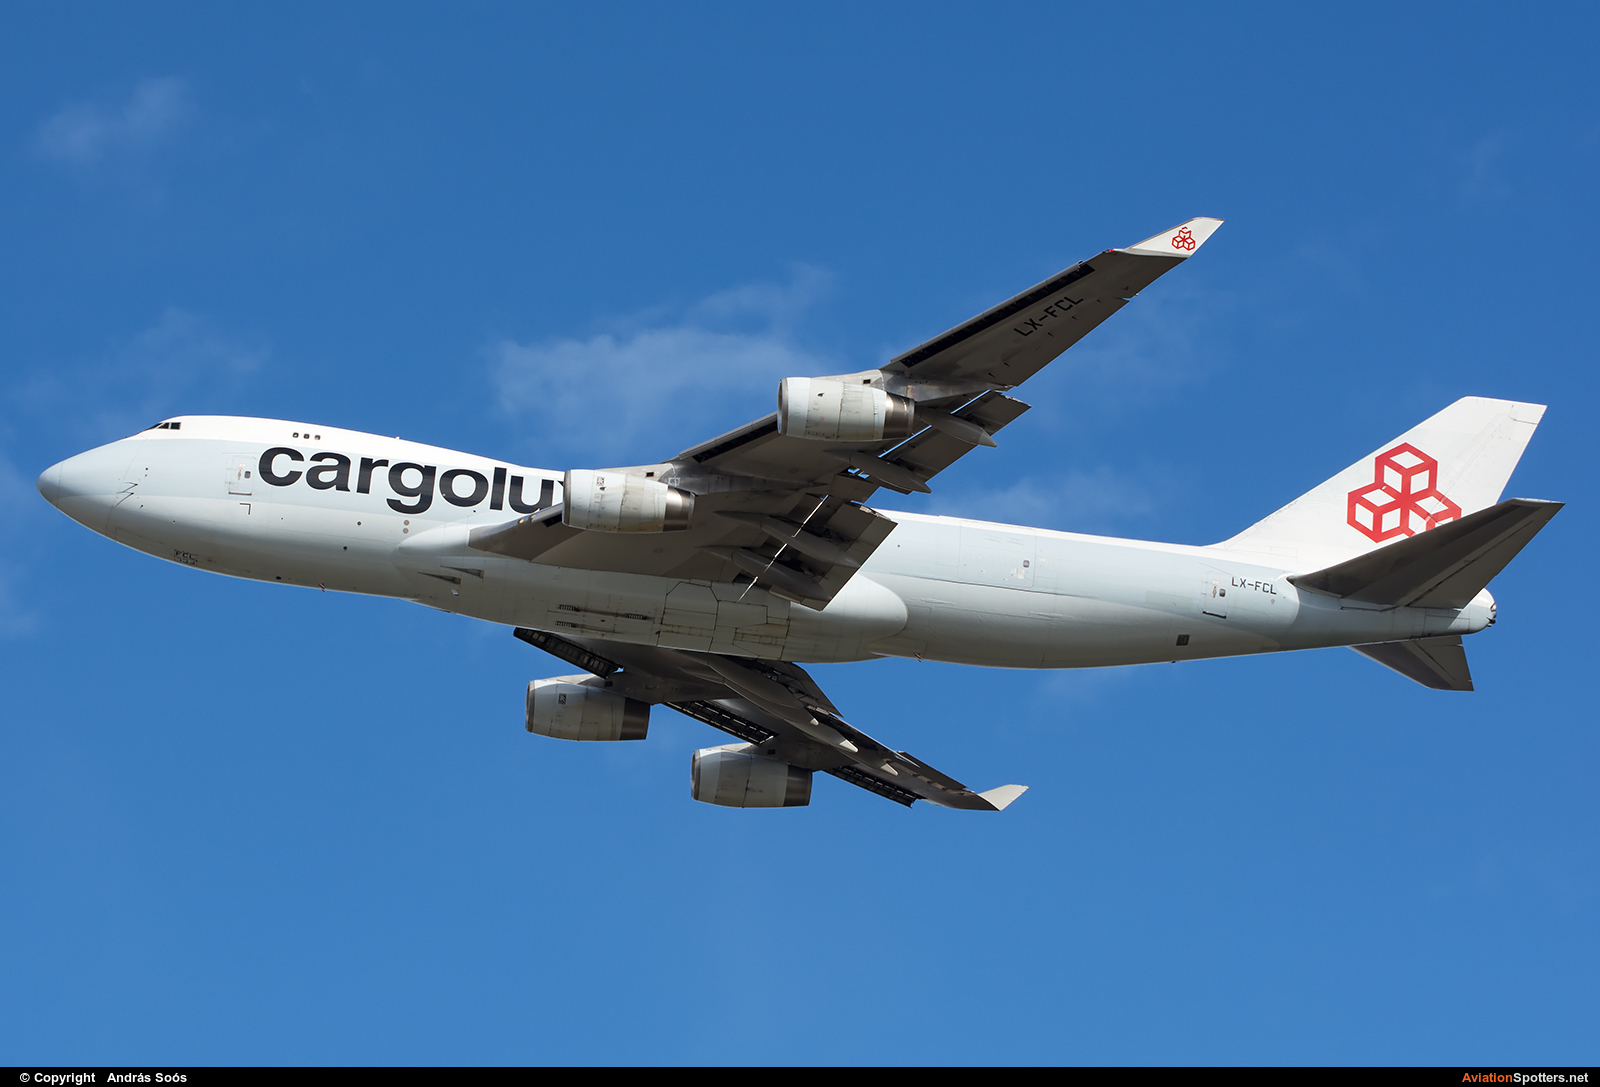 Cargolux  -  747-400F  (LX-FCL) By András Soós (sas1965)